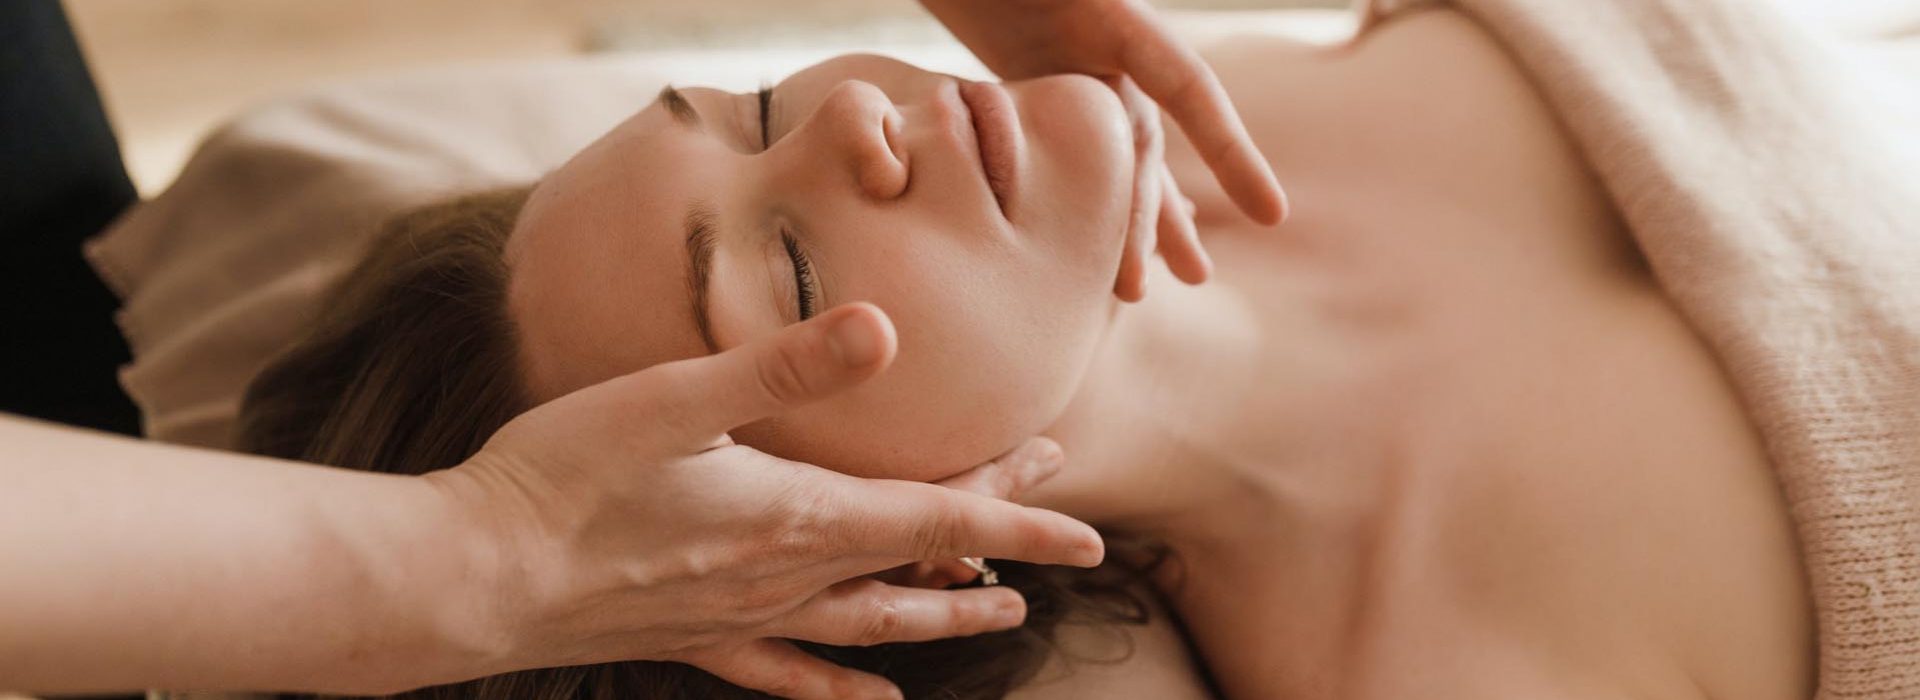 Mayfair massage acupuncture spa